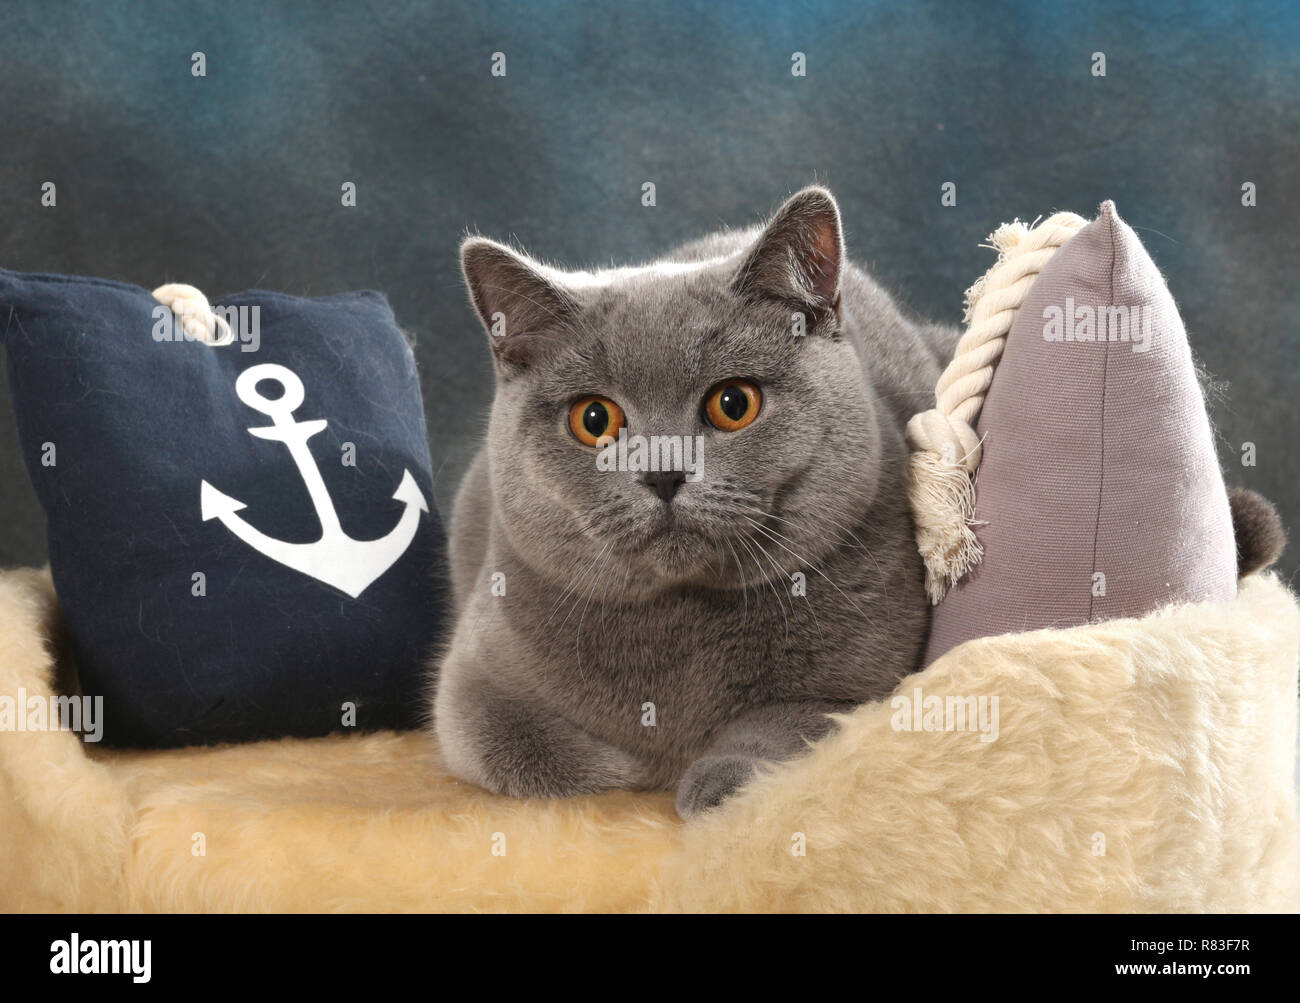 british shorthair cat, blue, lying between pillows Stock Photo